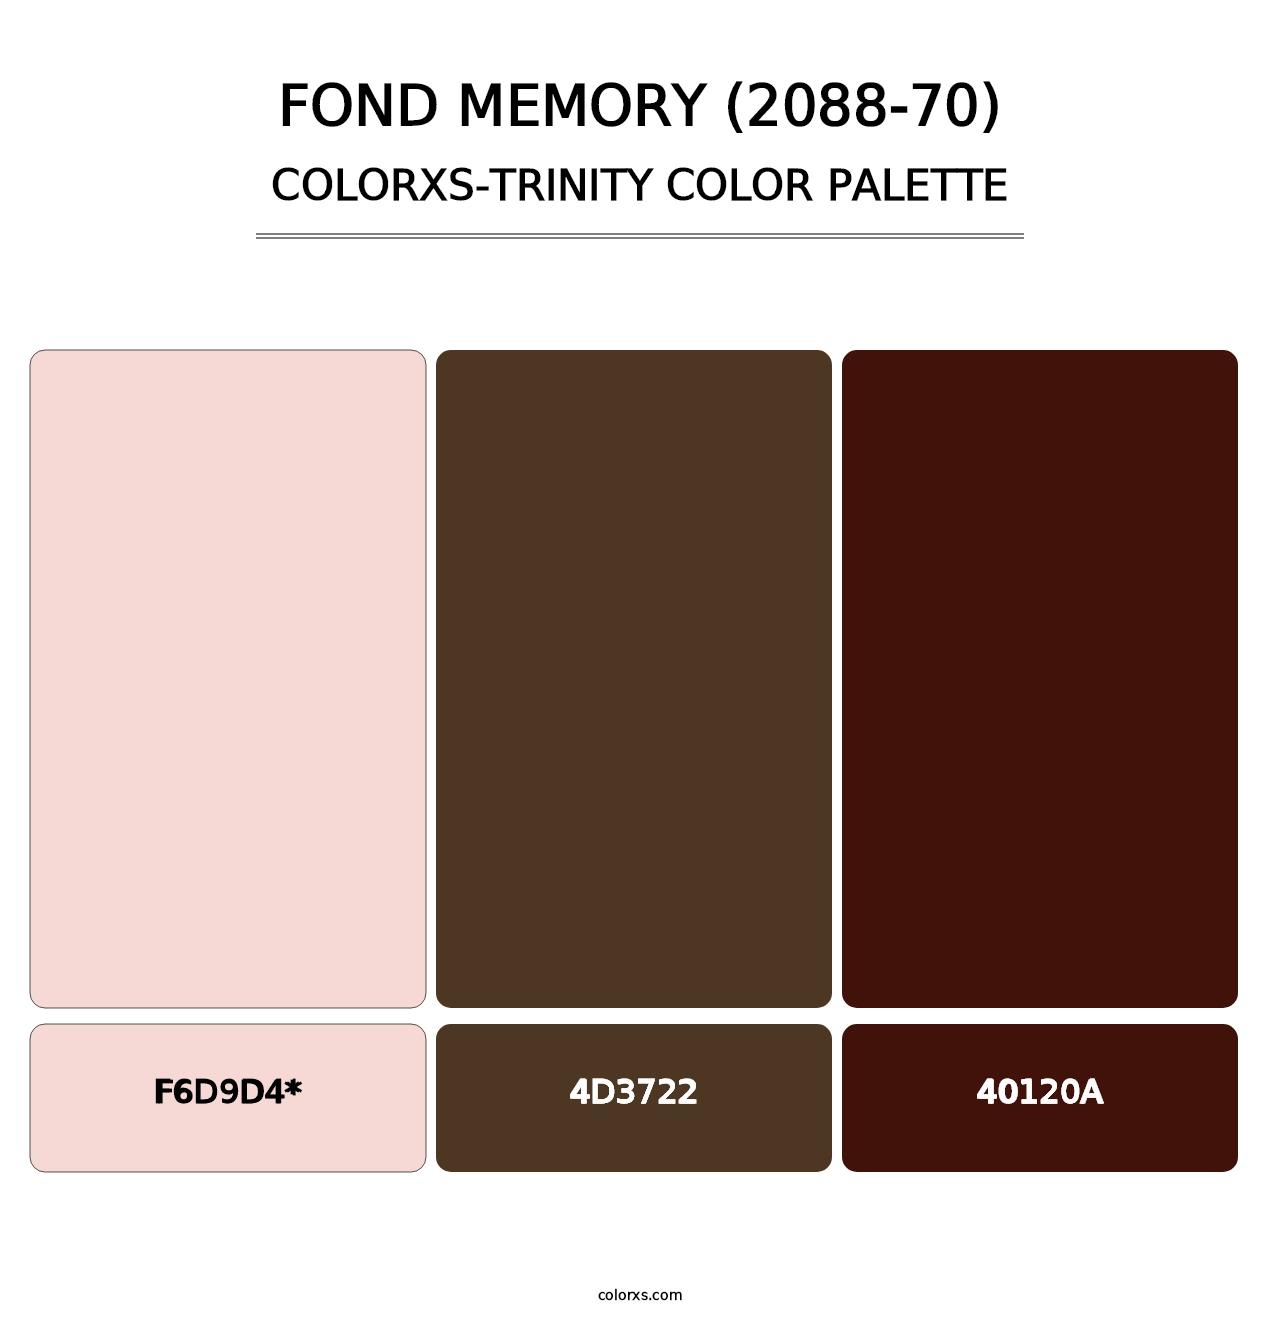 Fond Memory (2088-70) - Colorxs Trinity Palette